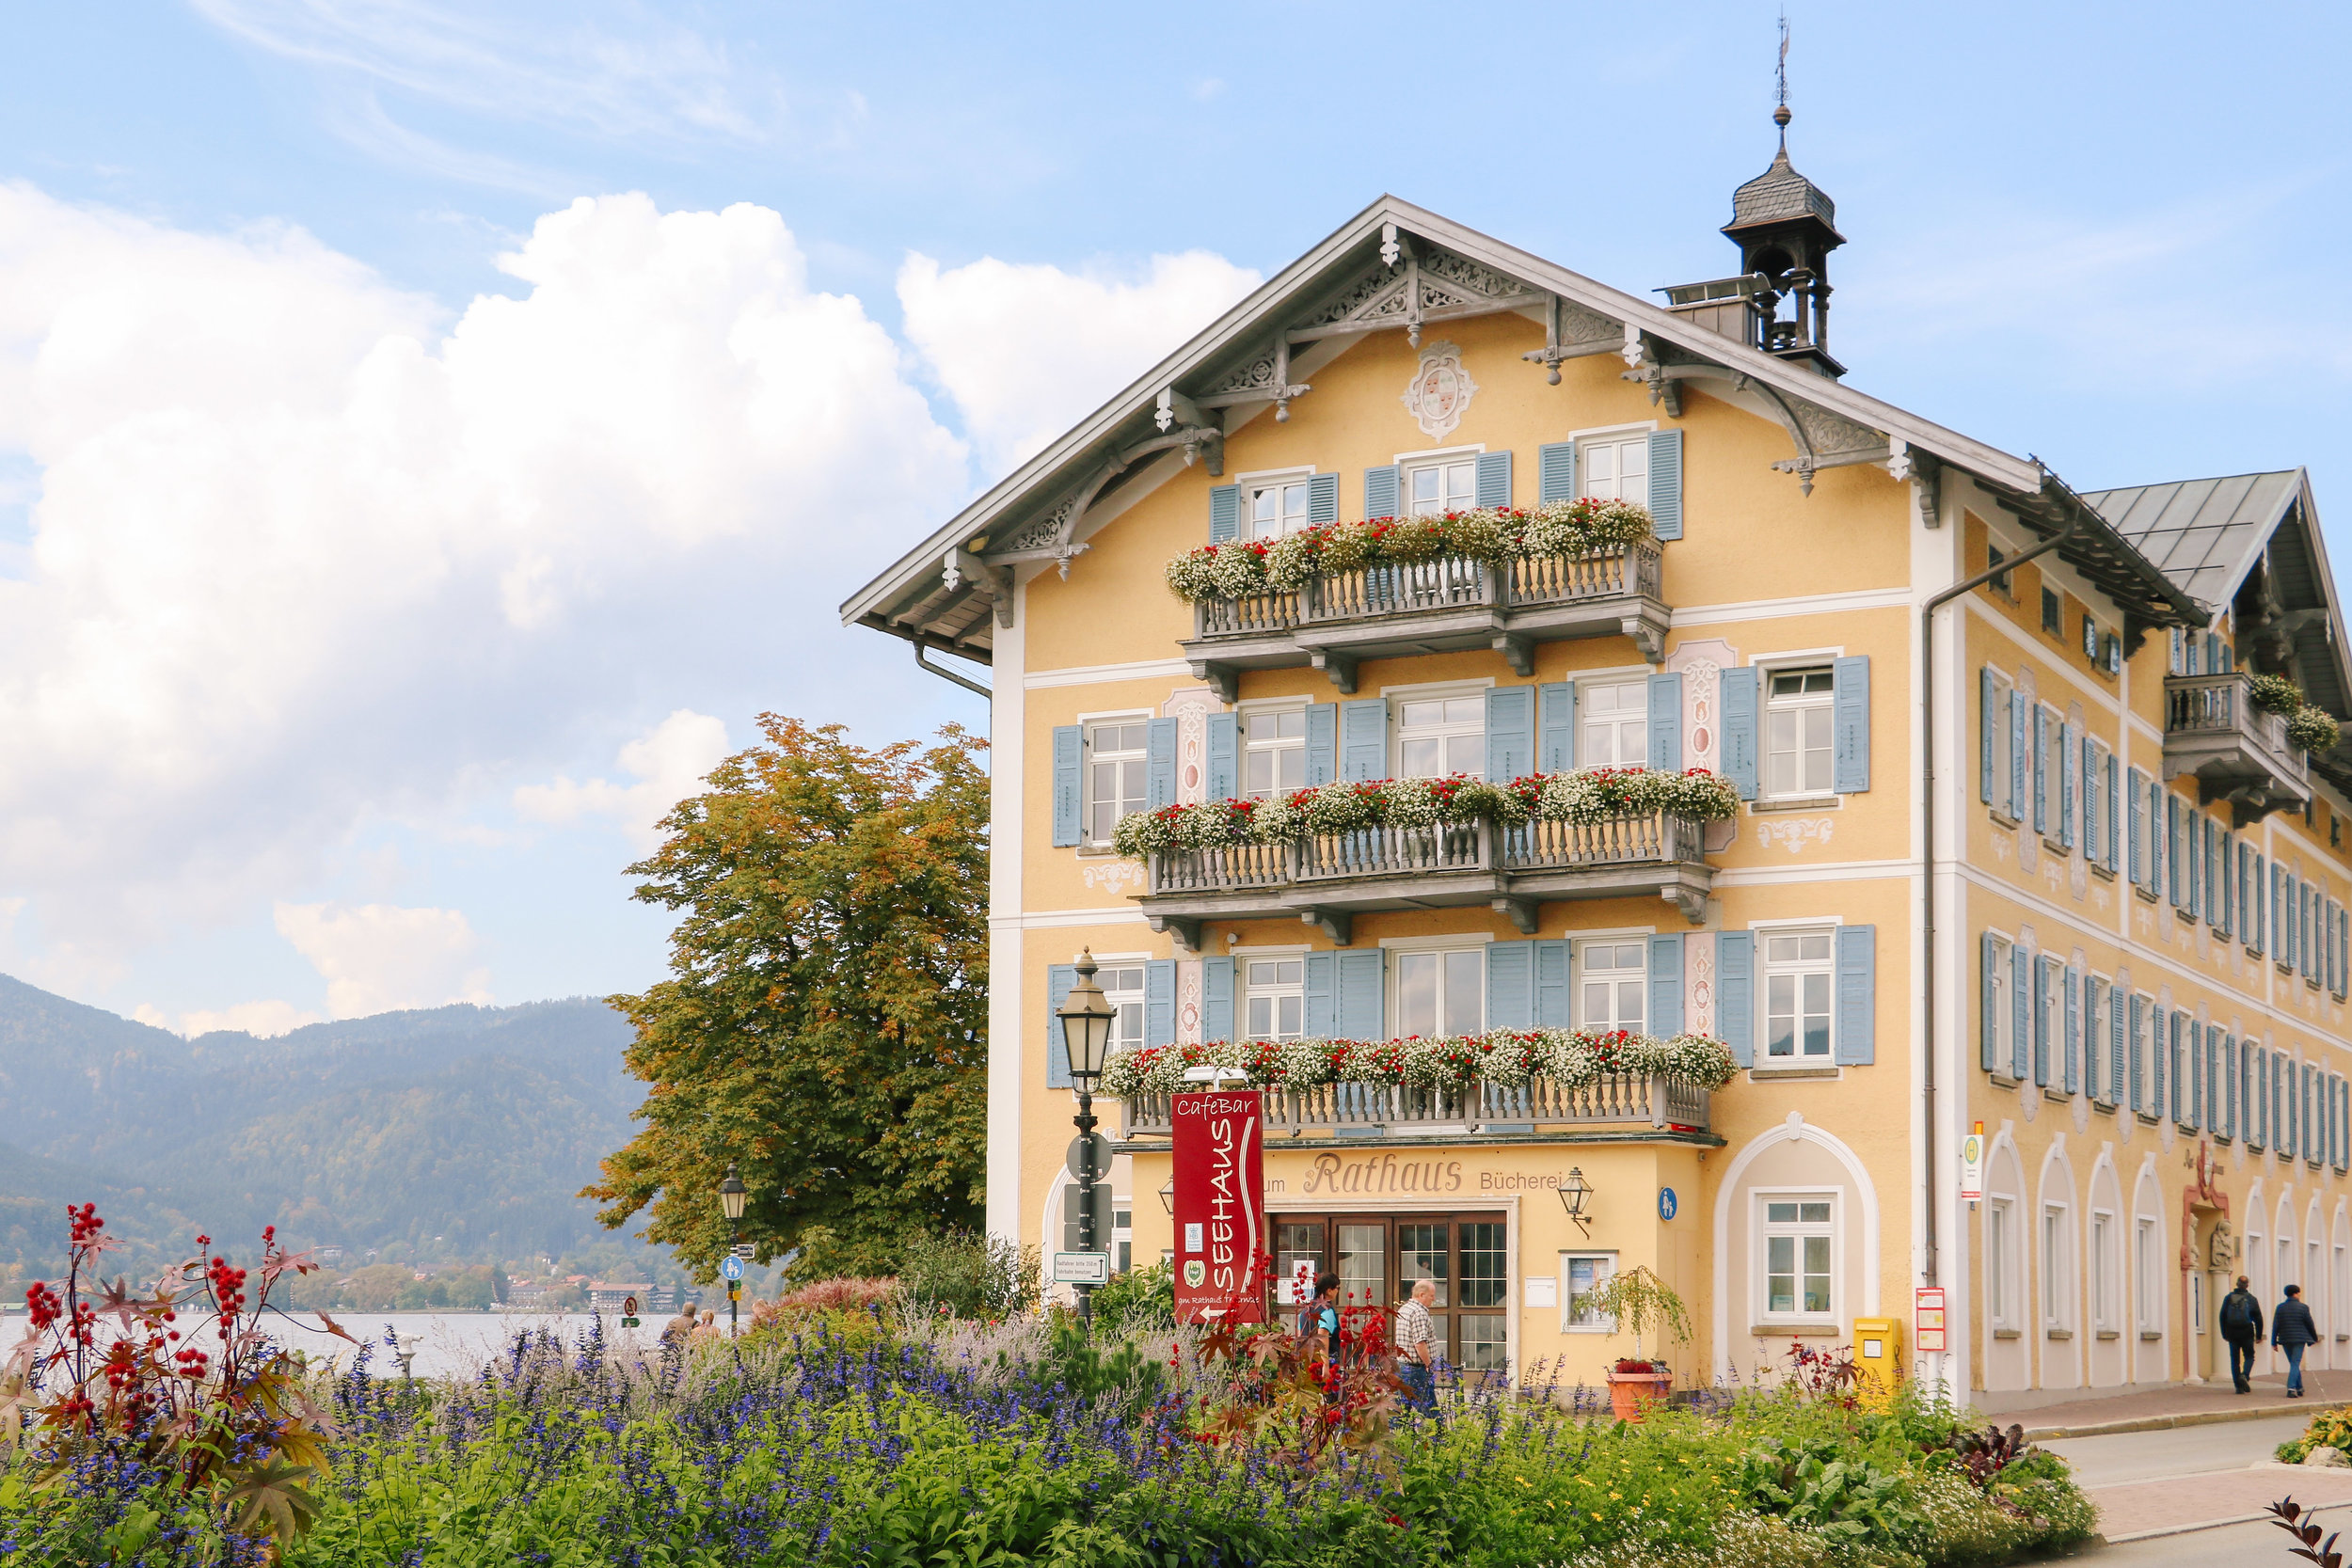 Hotel Spotlight: Bavaria's Hotel Bachmair Weissach - by Courtney Brown